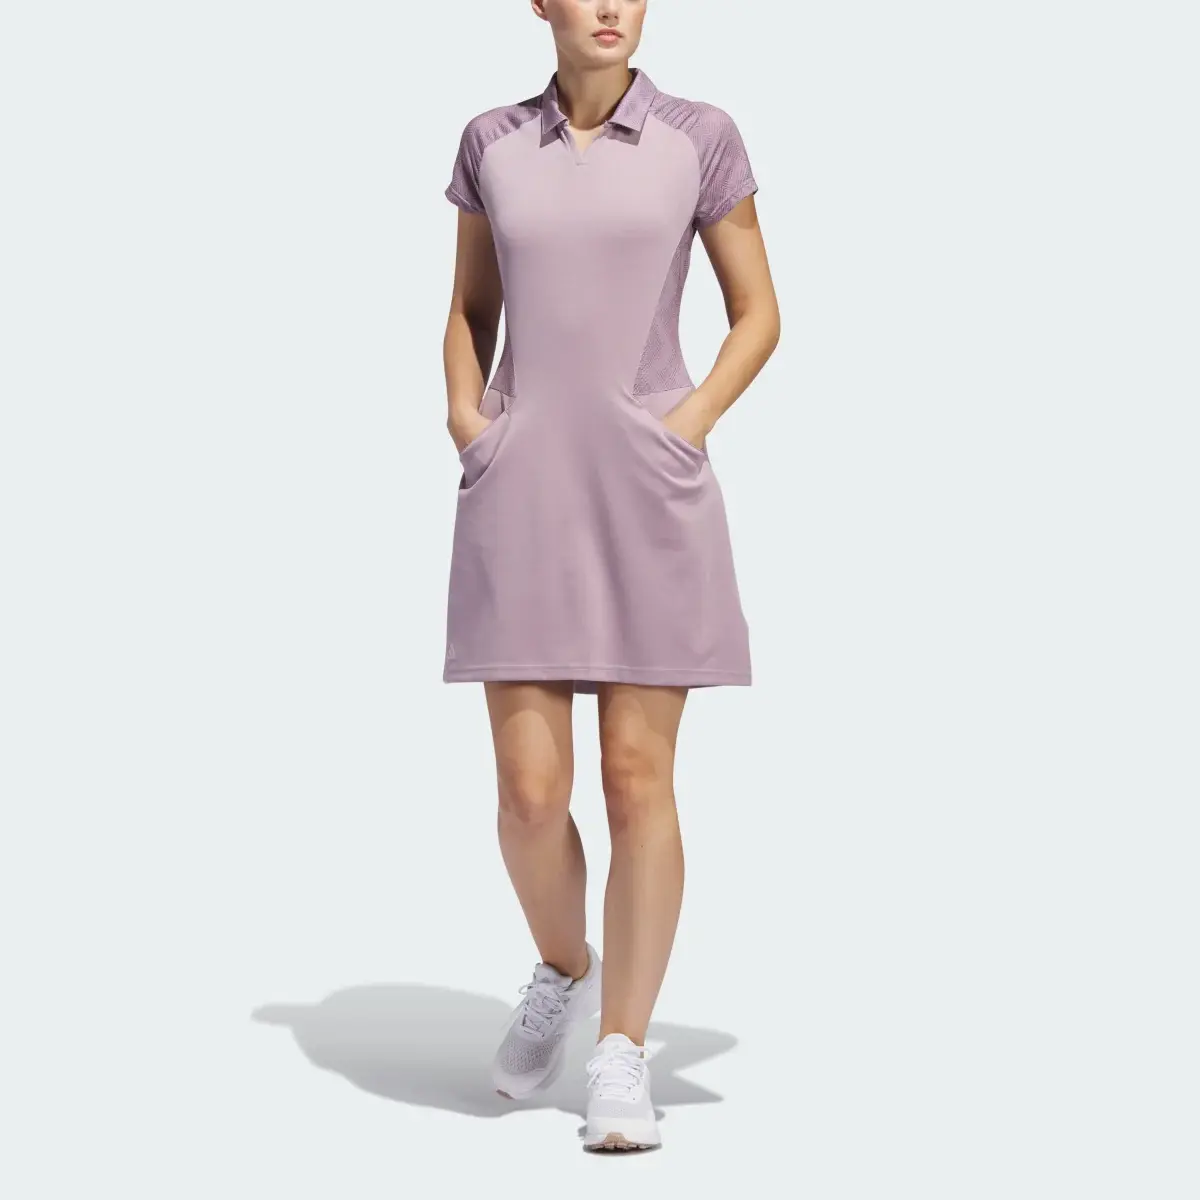 Adidas Women's Ultimate365 Short Sleeve Dress. 1